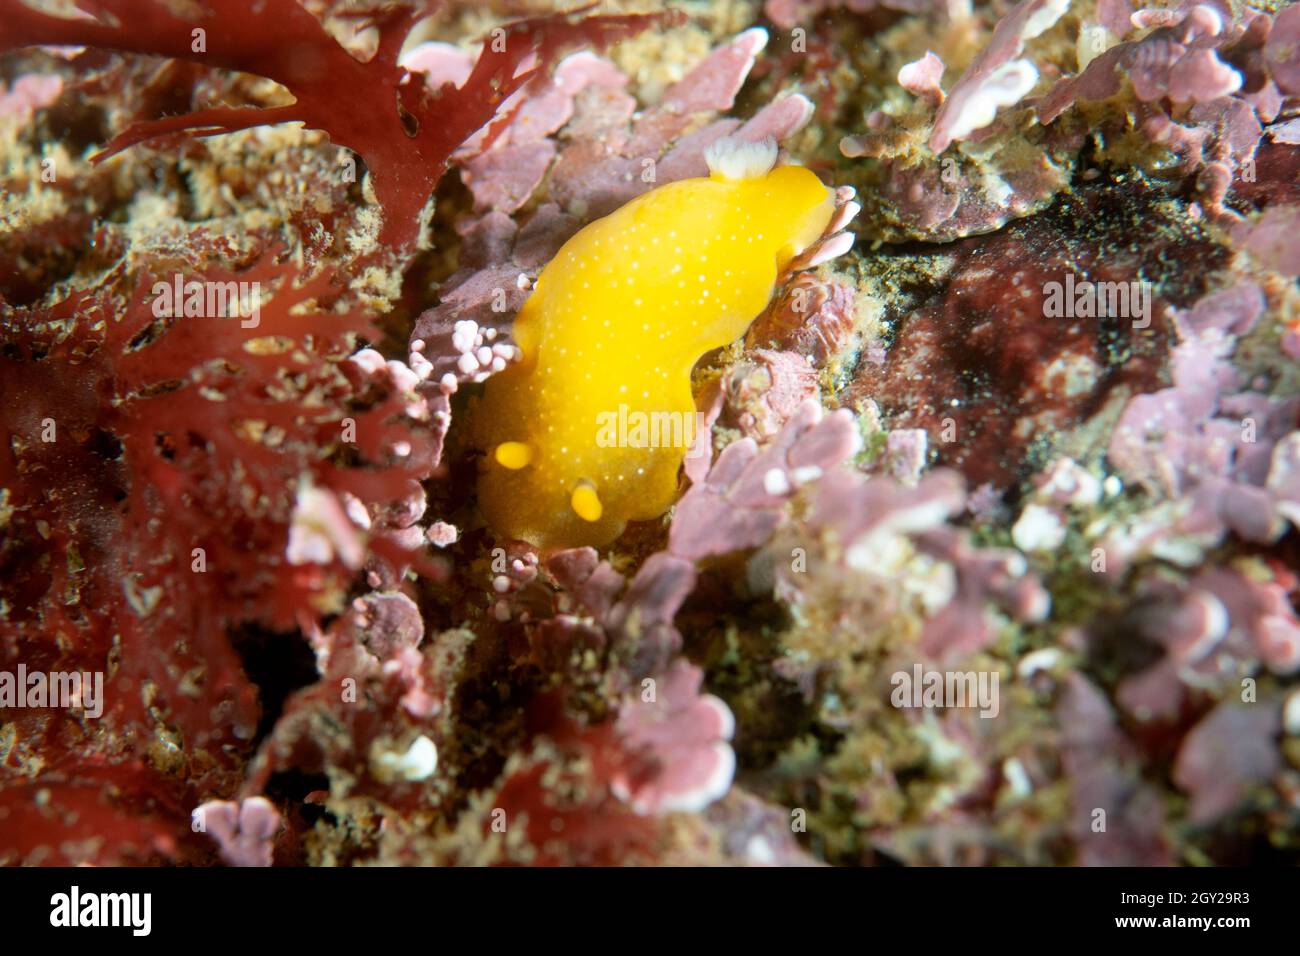 Dorid nudibranch or sea slug, Doriopsilla albopunctata, Point Lobos State Natural Reserve, California, USA Stock Photo